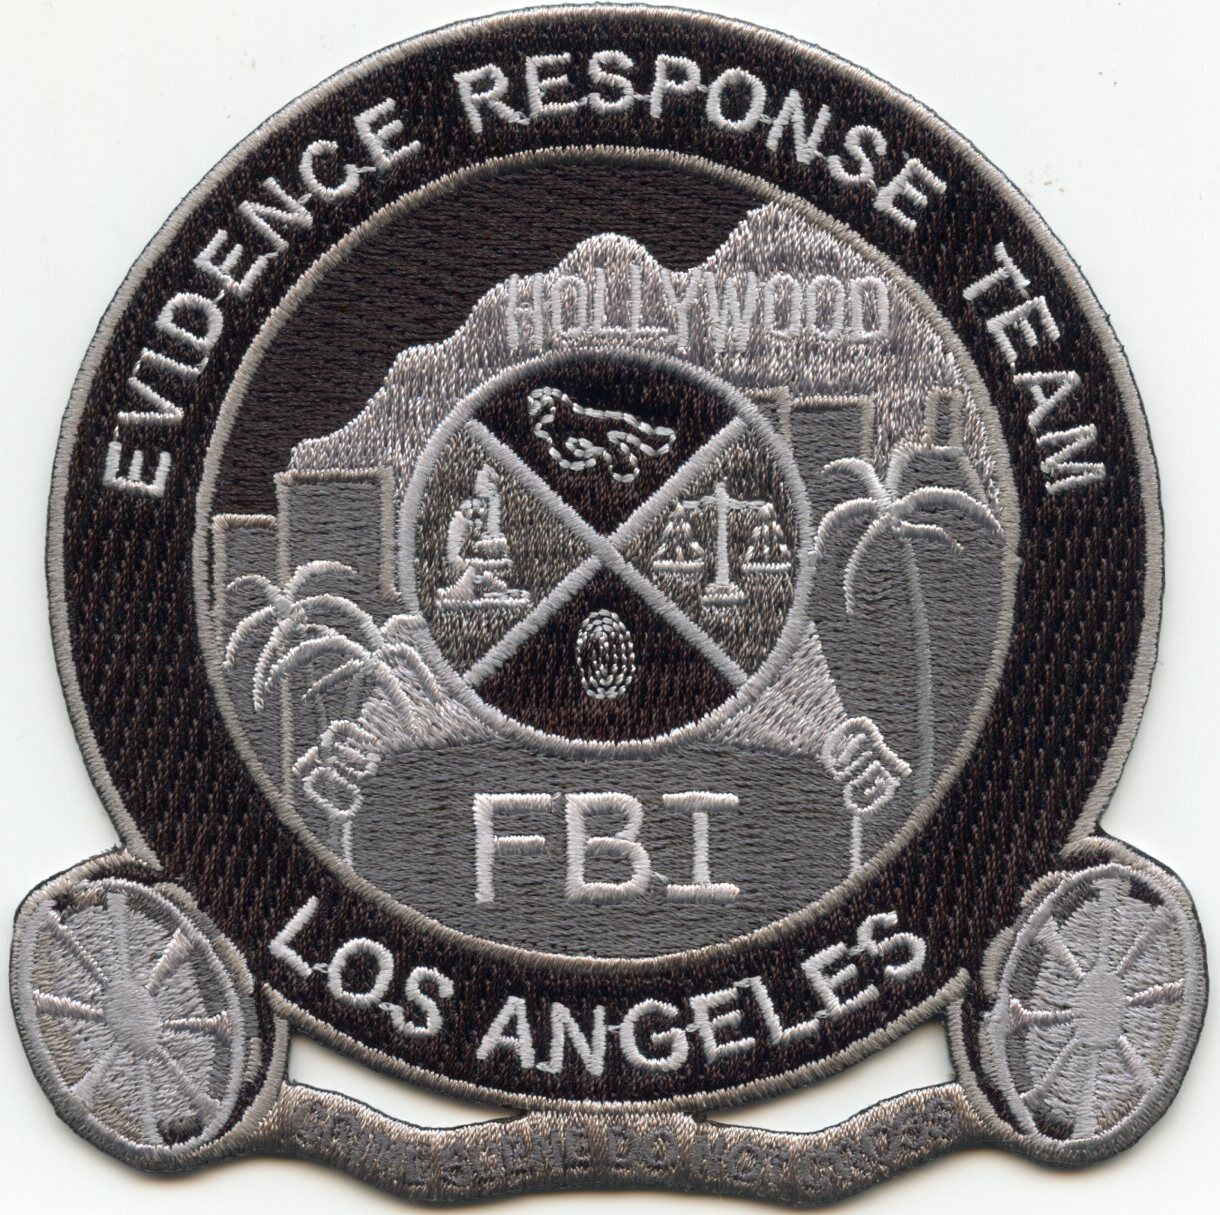 FBI LOS ANGELES CALIFORNIA EVIDENCE RESPONSE subdued gray CSI POLICE PATCH